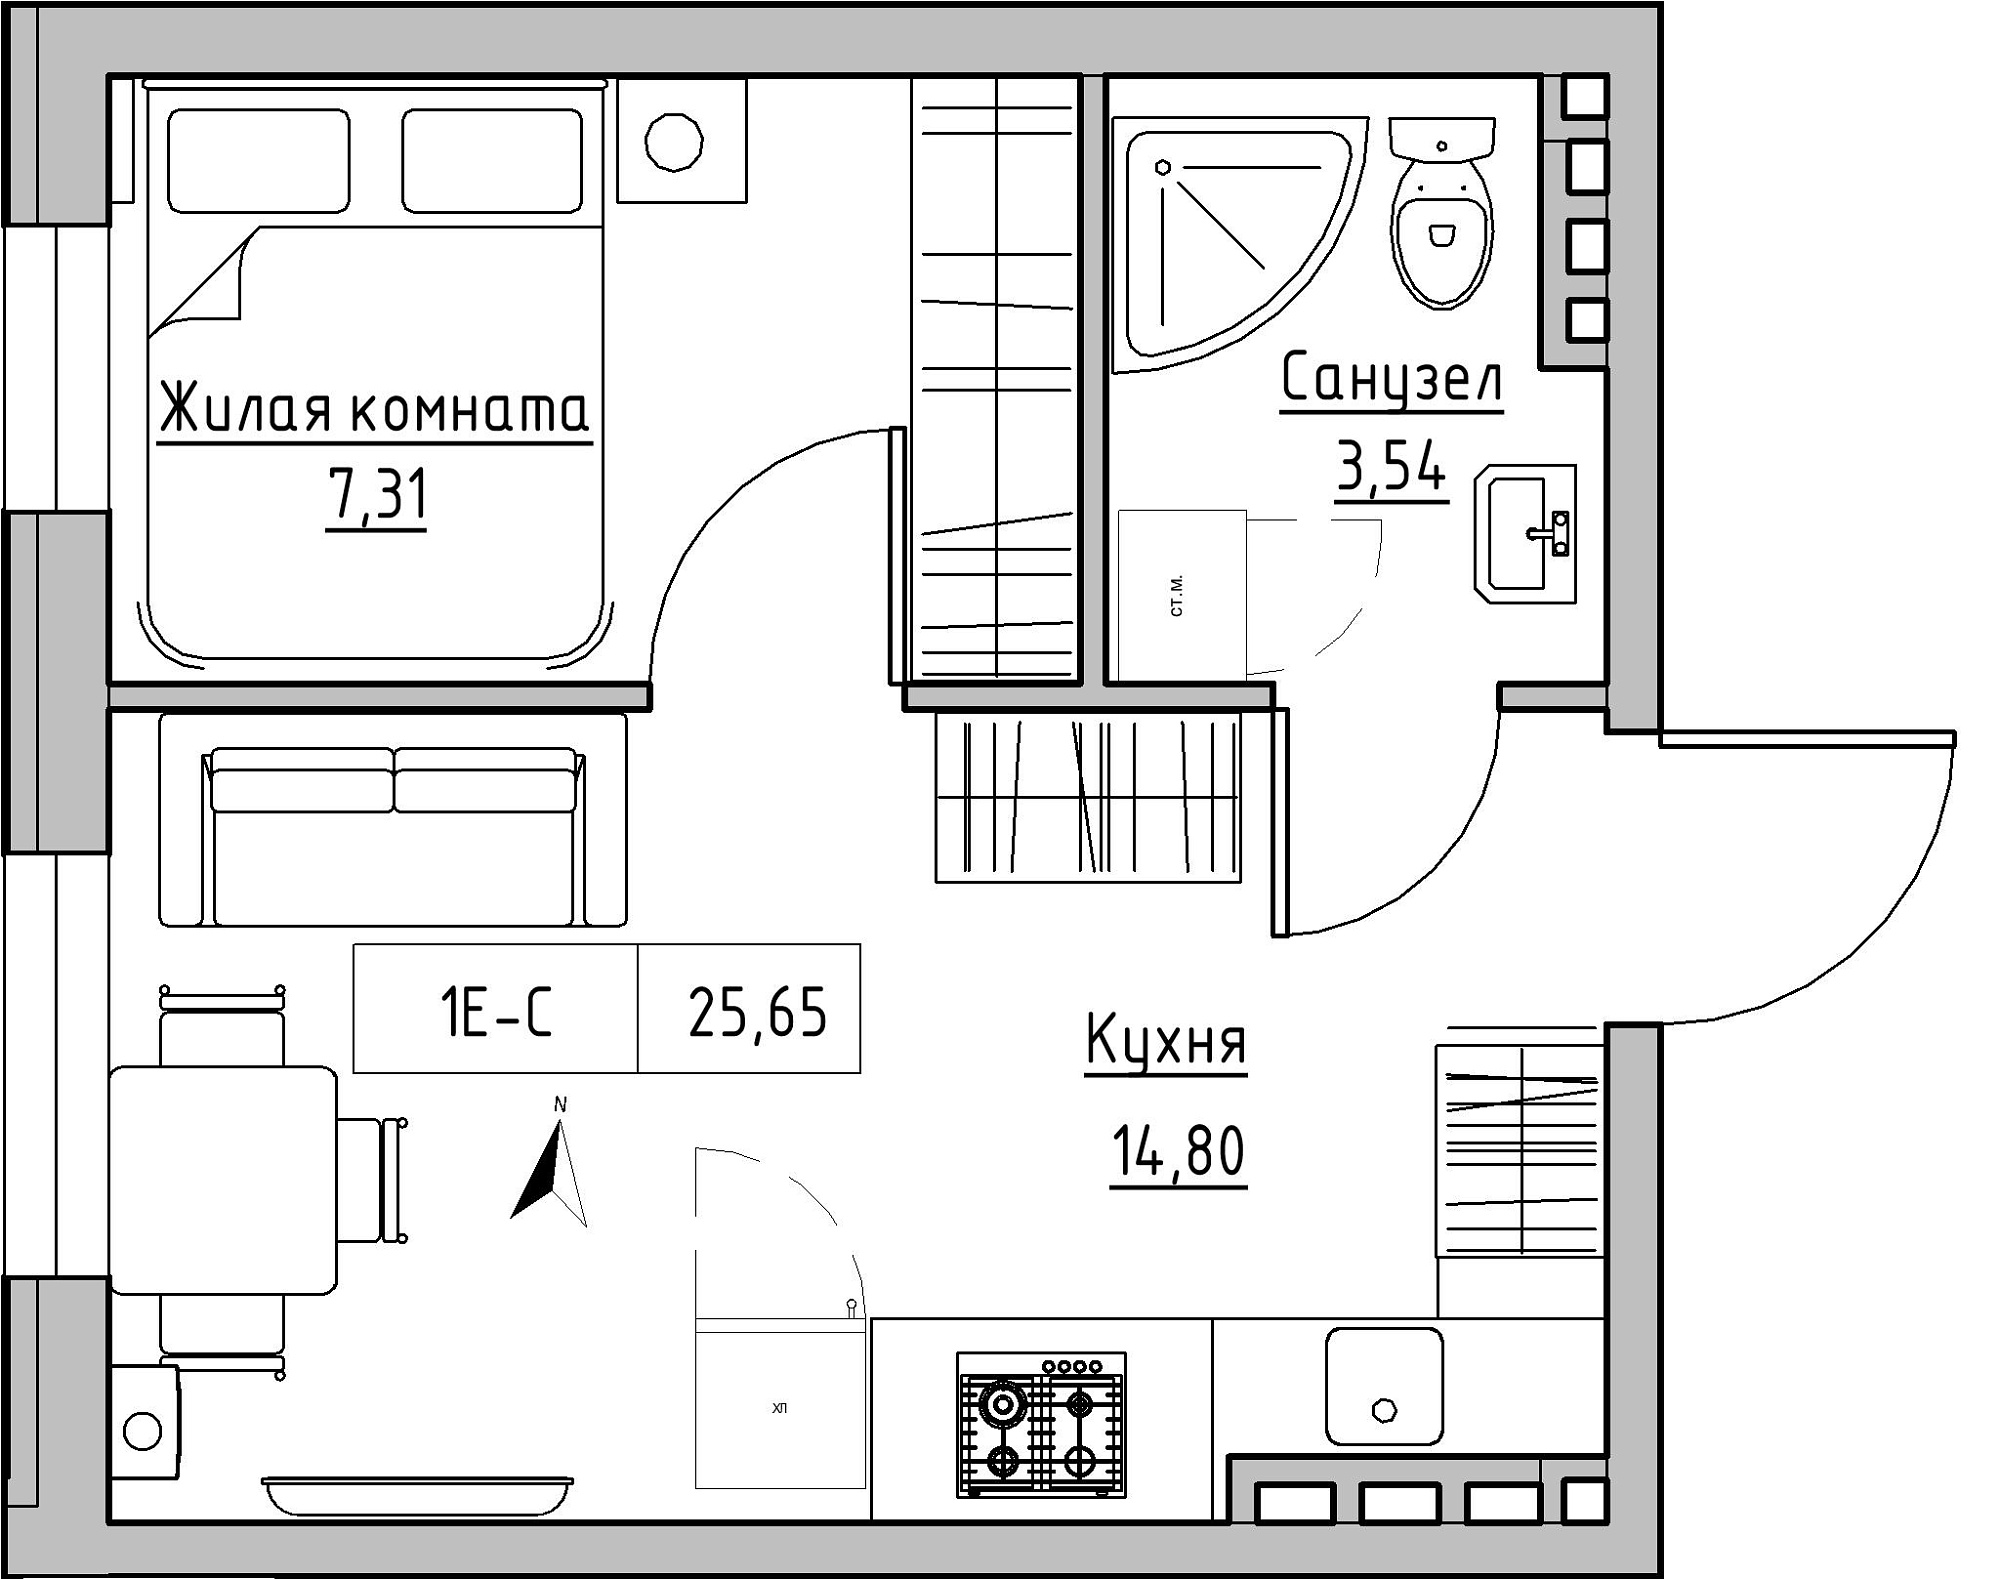 Planning 1-rm flats area 25.65m2, KS-024-03/0014.